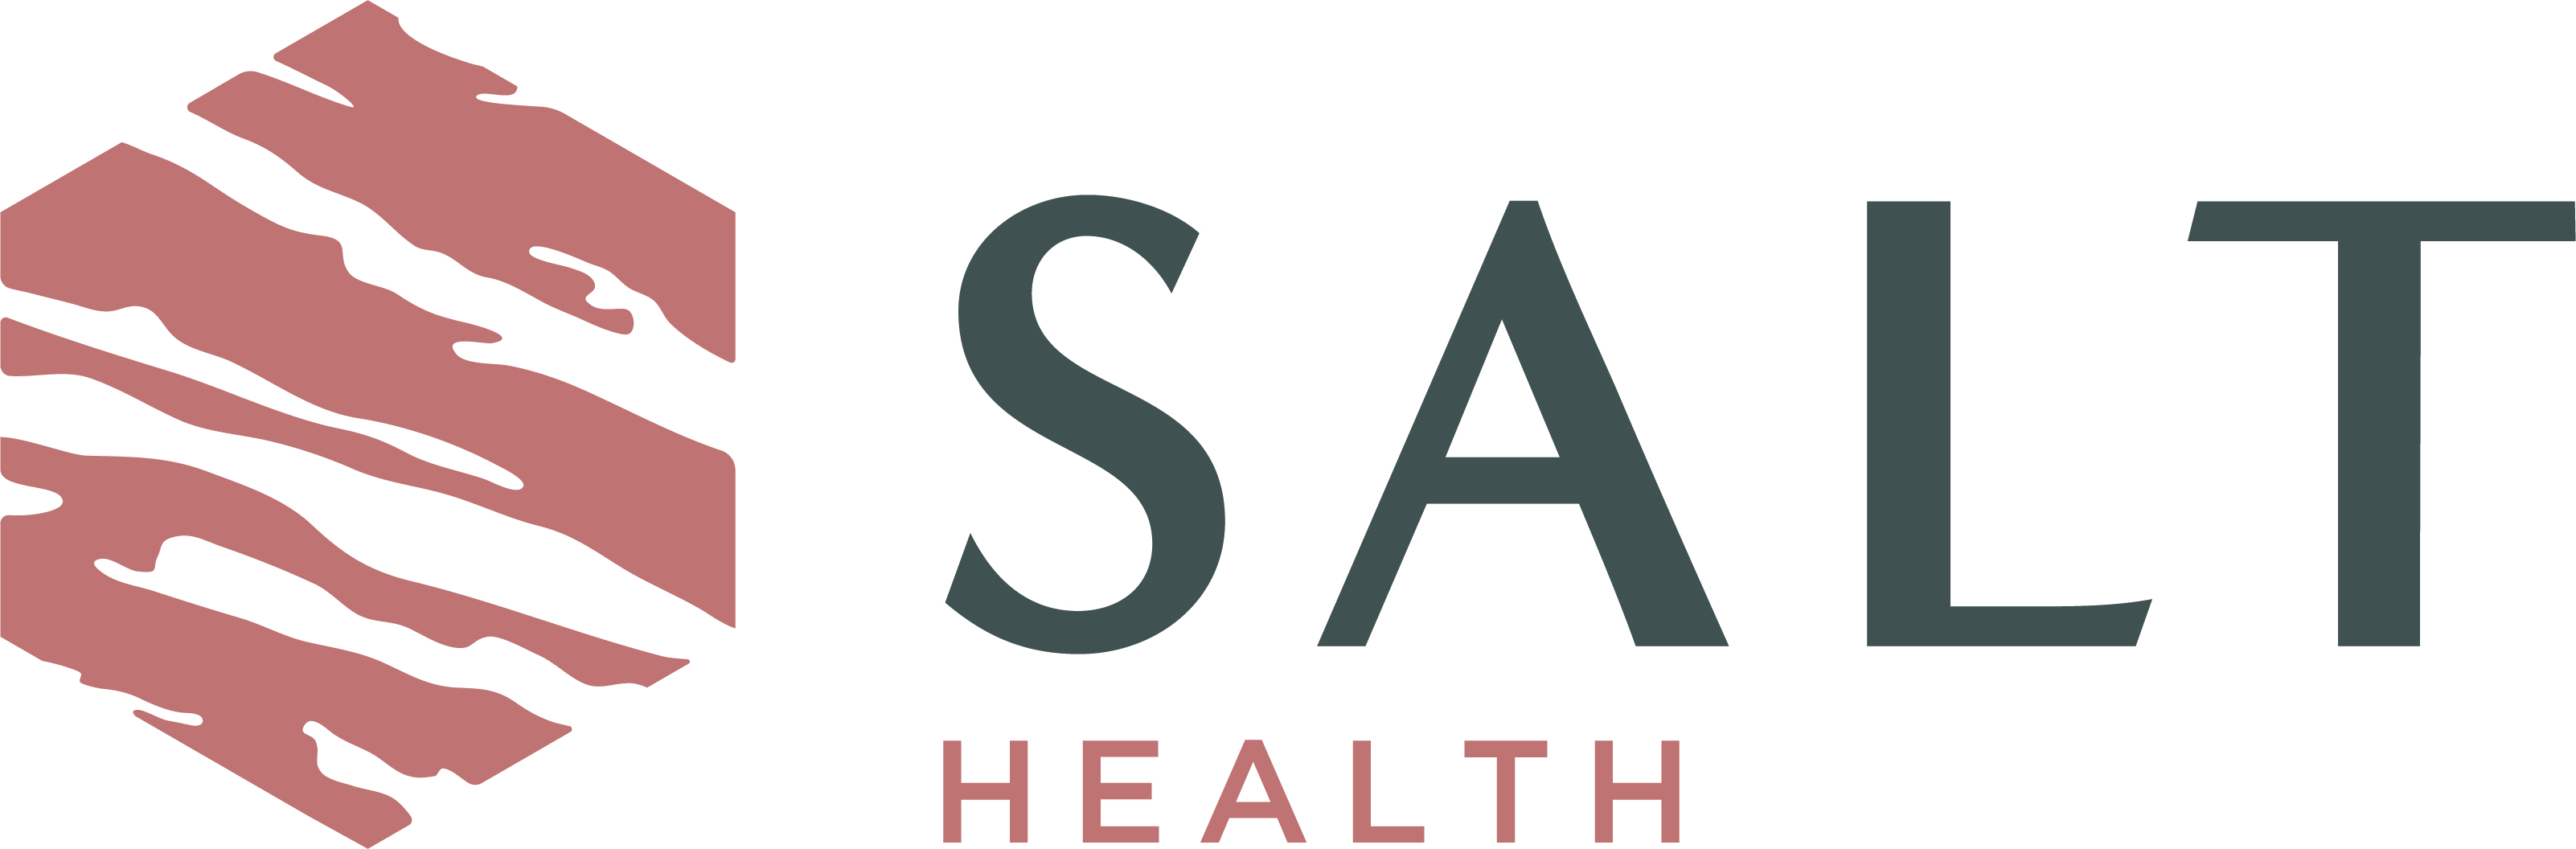 SALT Health Logo